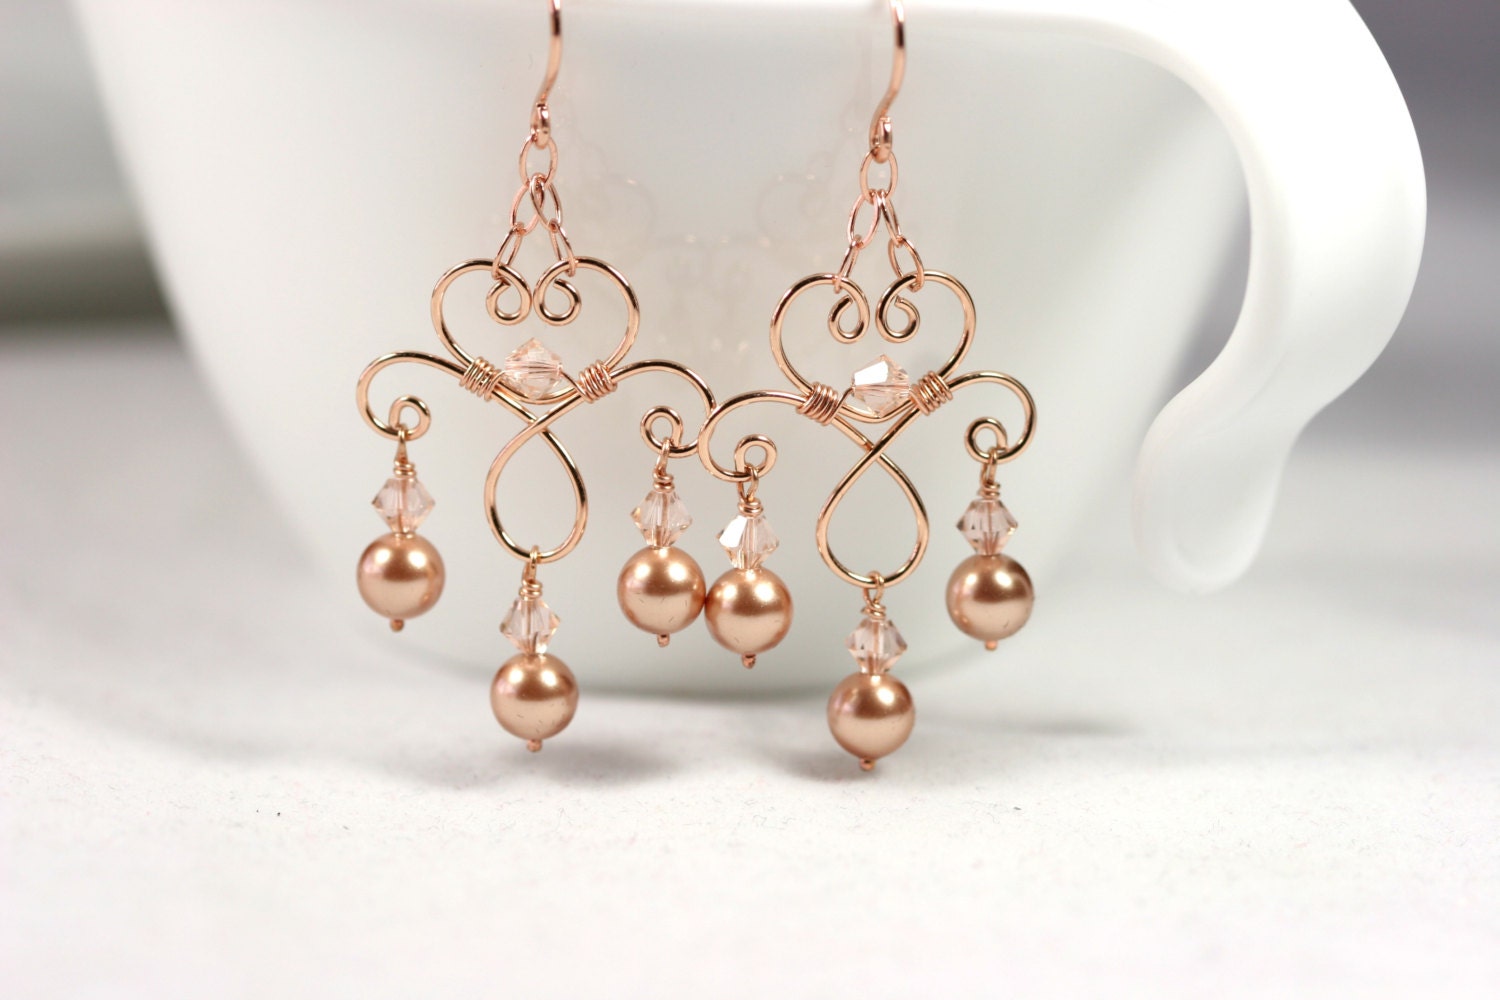 Rose Gold Chandelier Earrings Wire Wrapped Jewelry Handmade